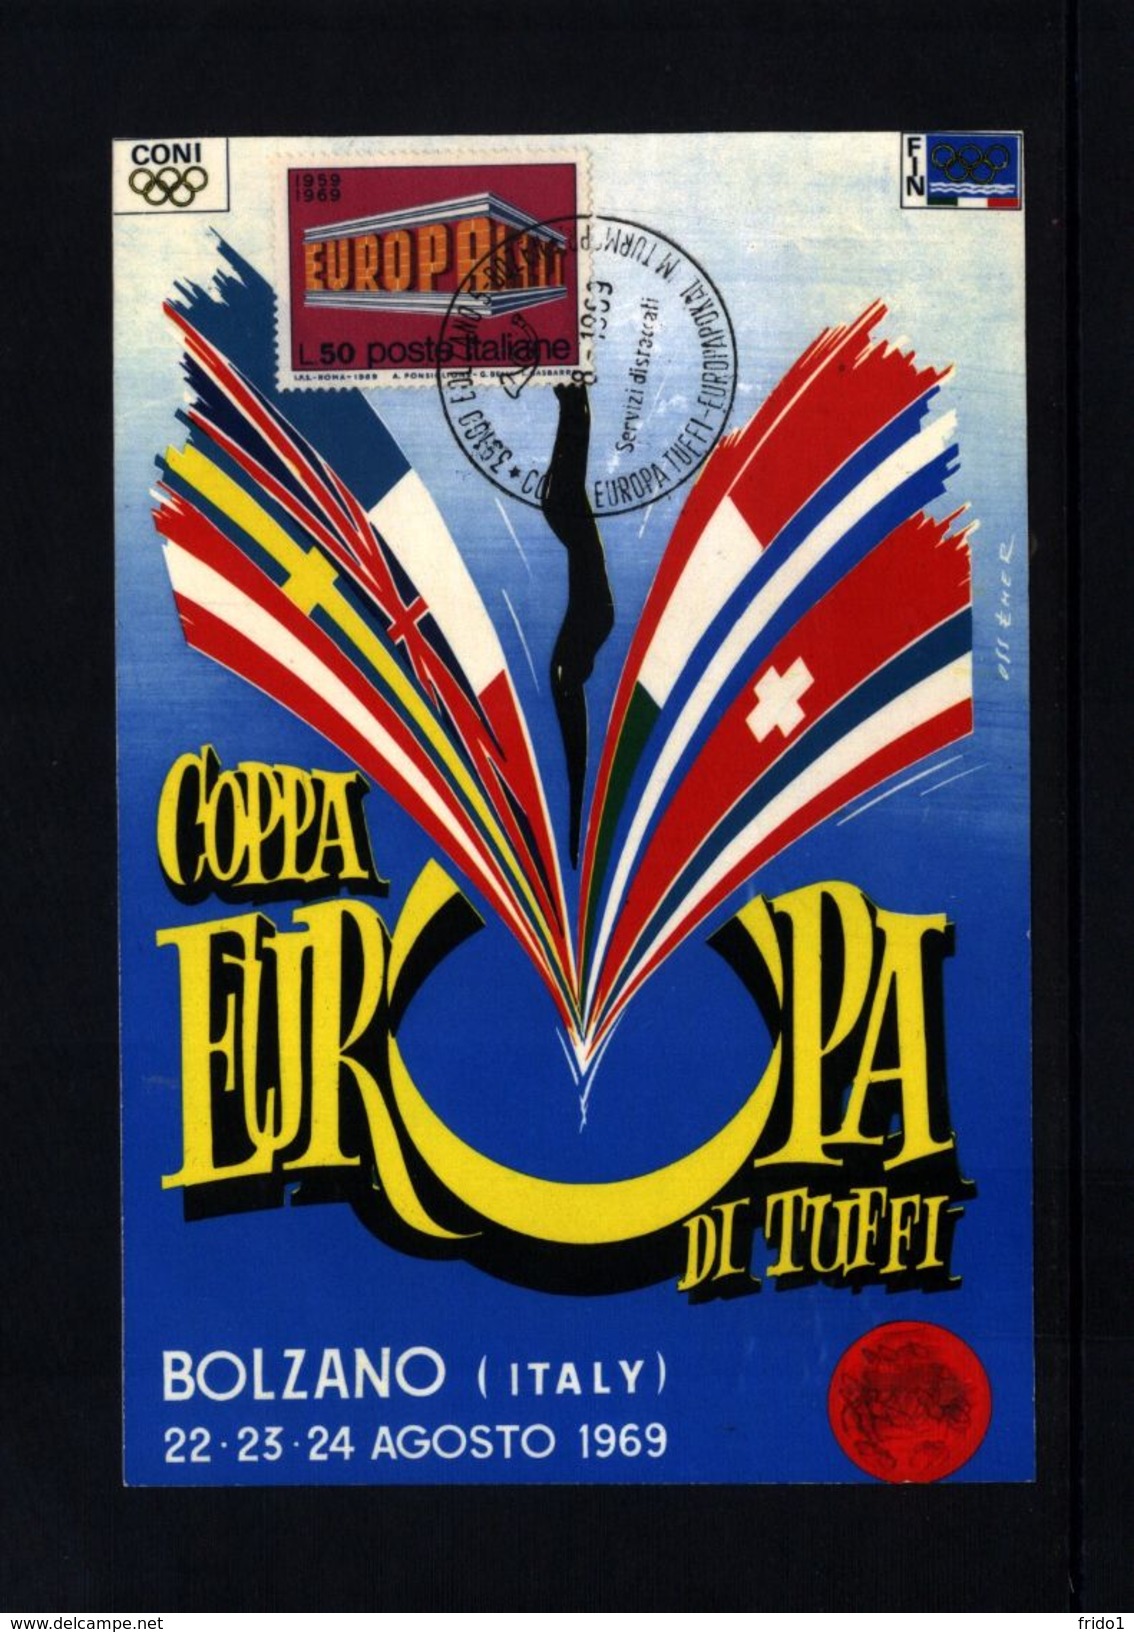 Italien / Italy Bologna 1969 Bolzano European Diving Championship Interesting Postcard - Duiken